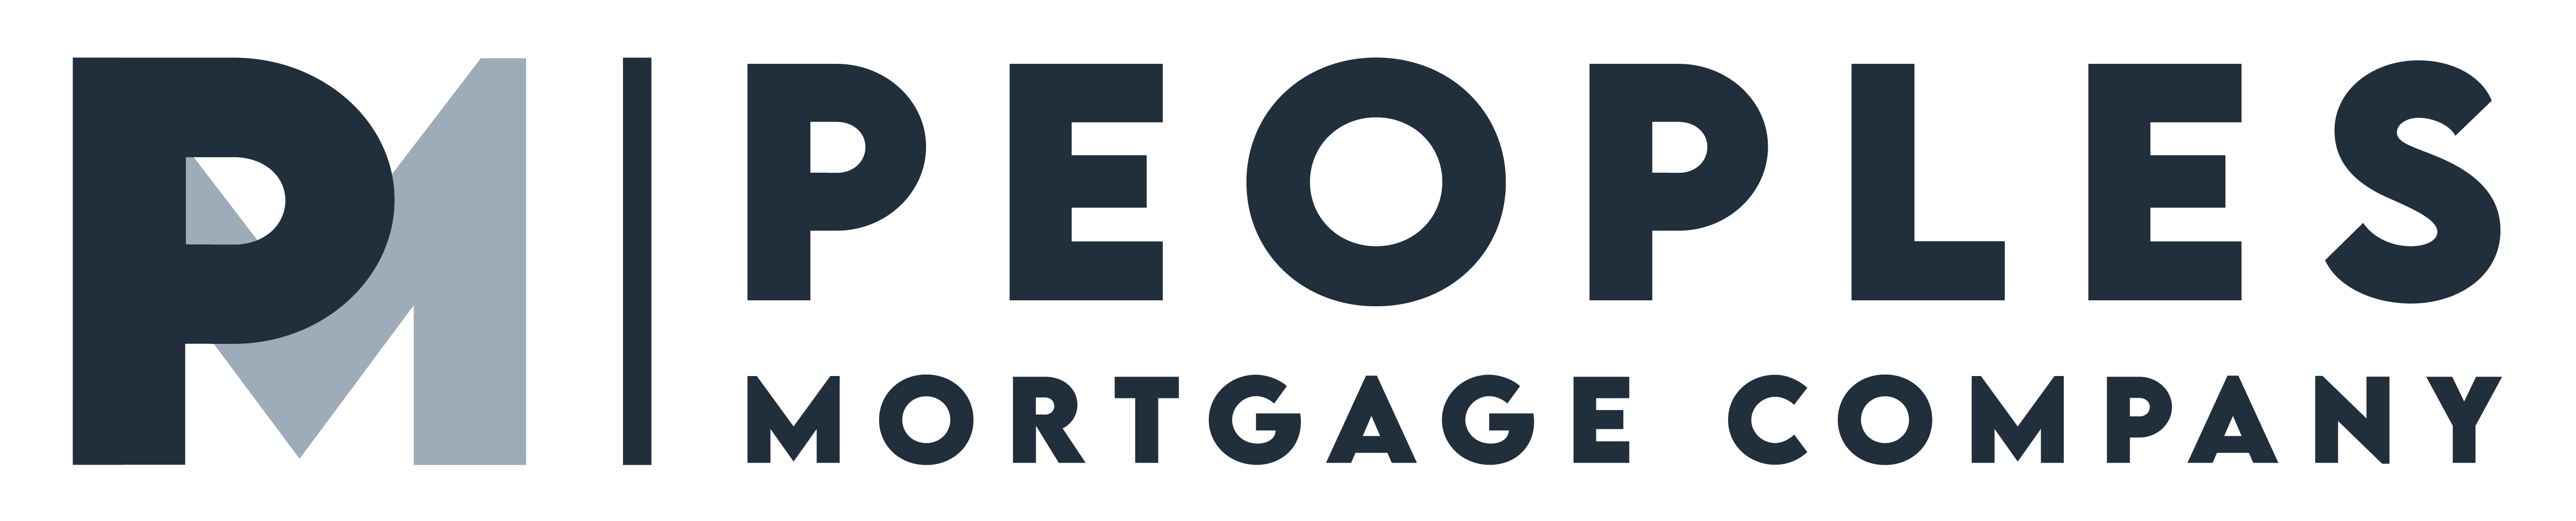 Peoples Mortgage Company logo